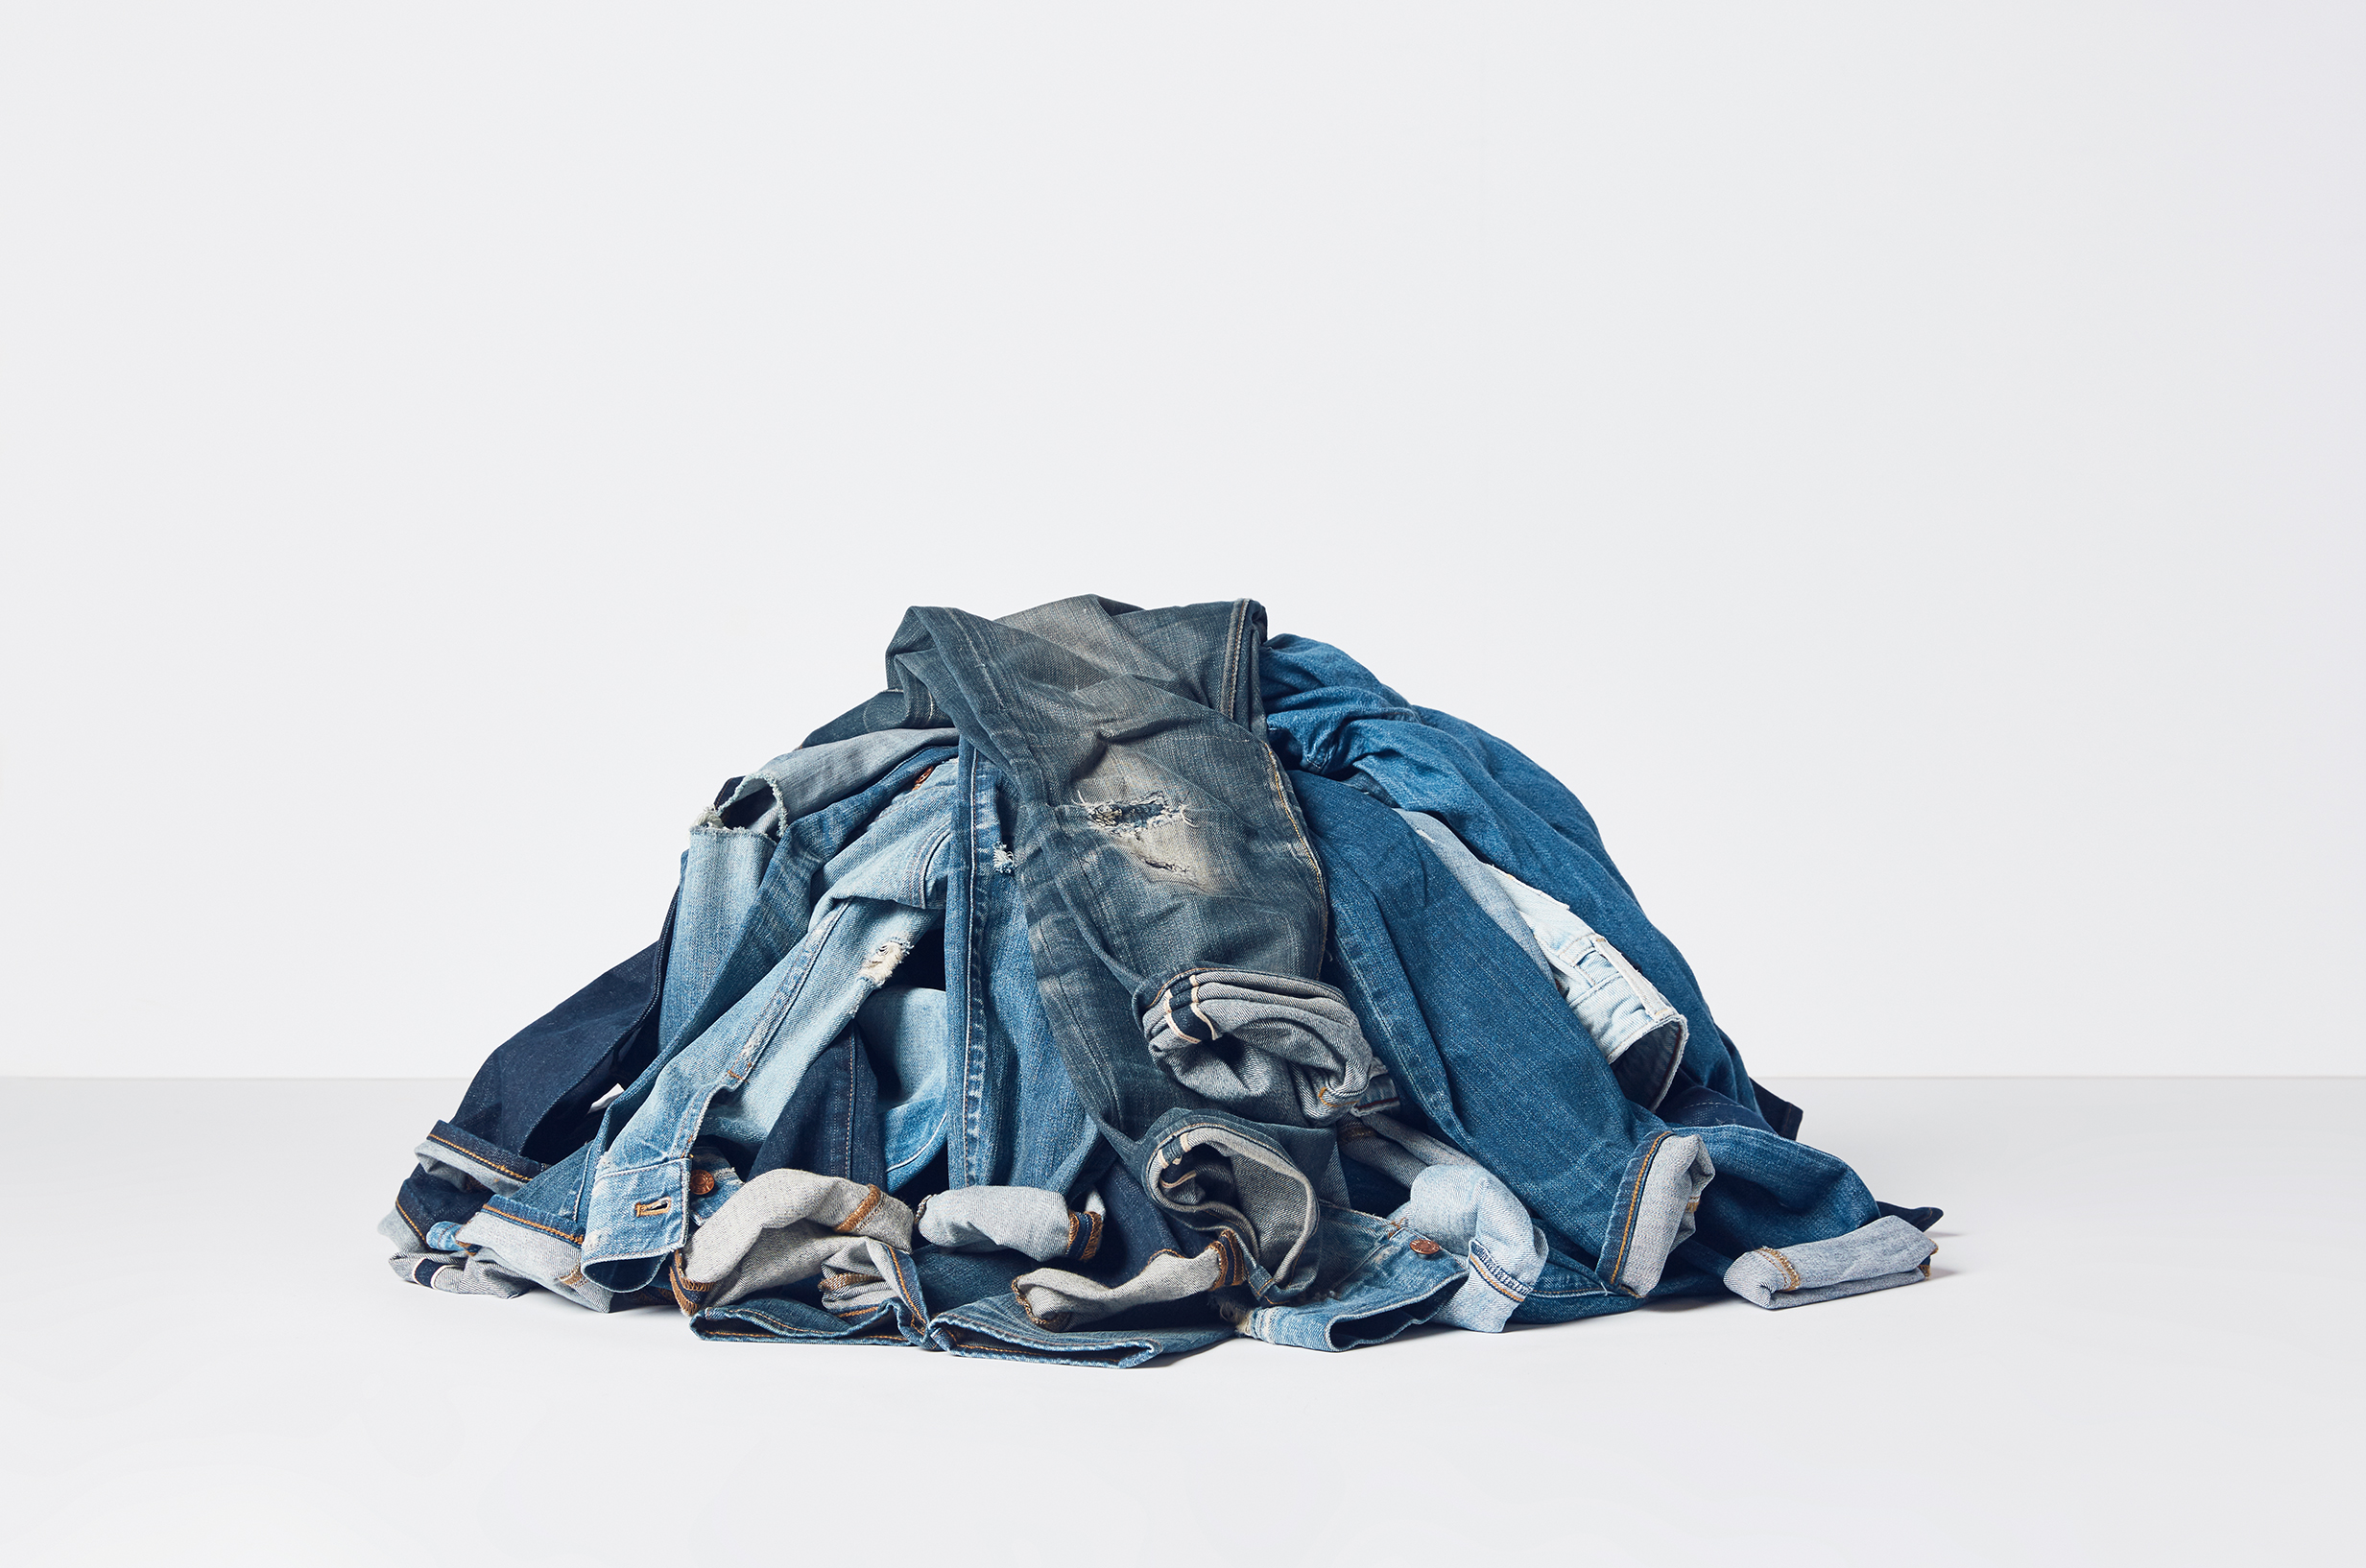 New Carhartt Program Keeps Worn Workwear Out Of Landfills